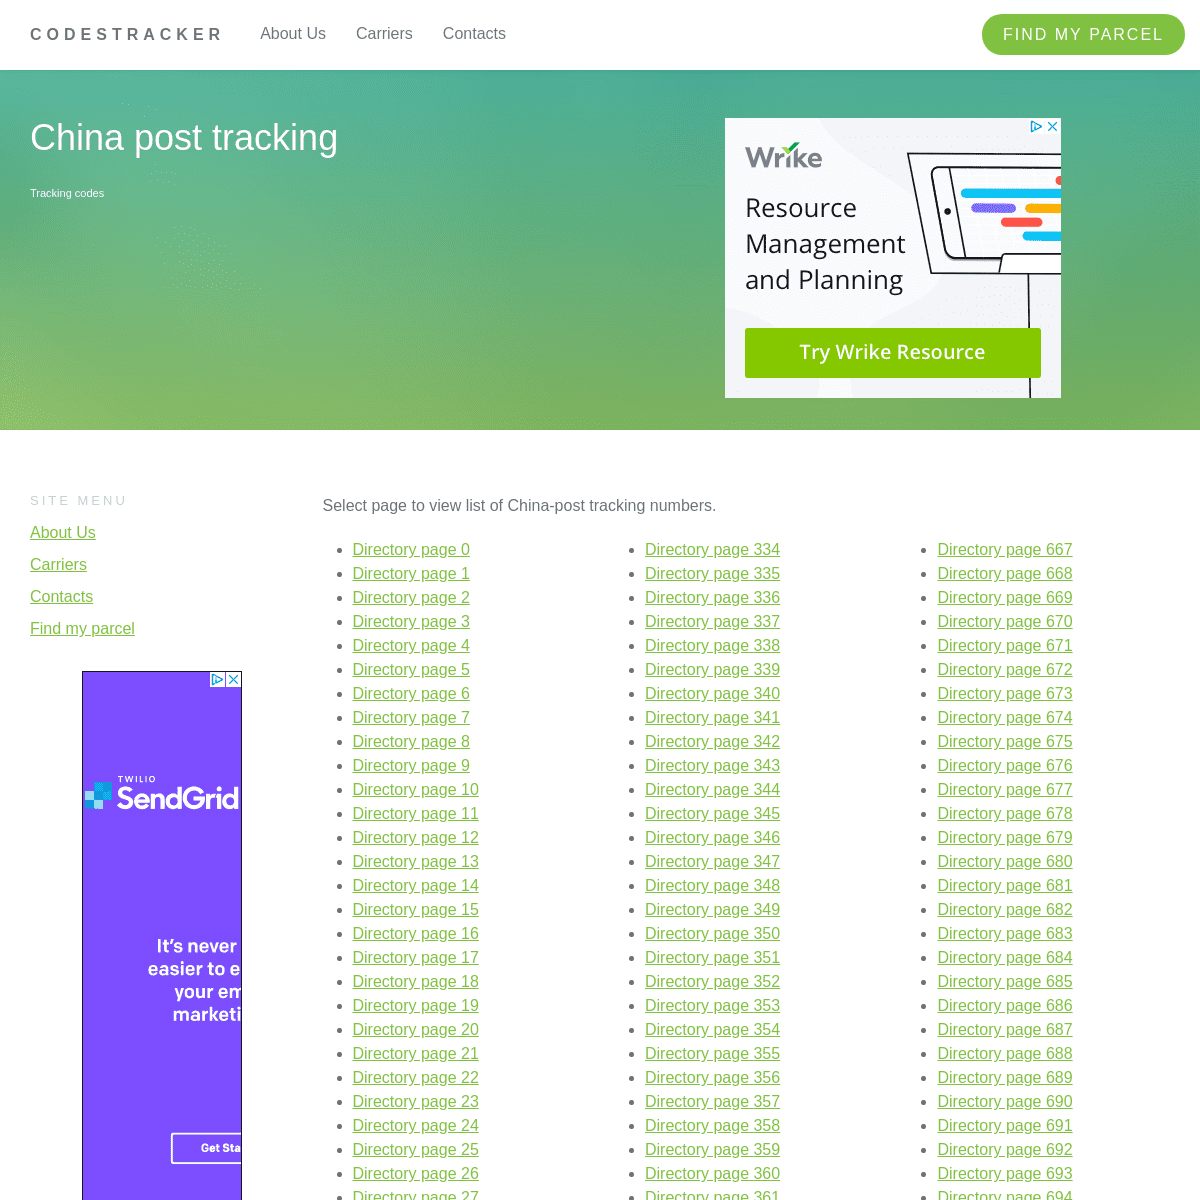 A complete backup of codestracker.com